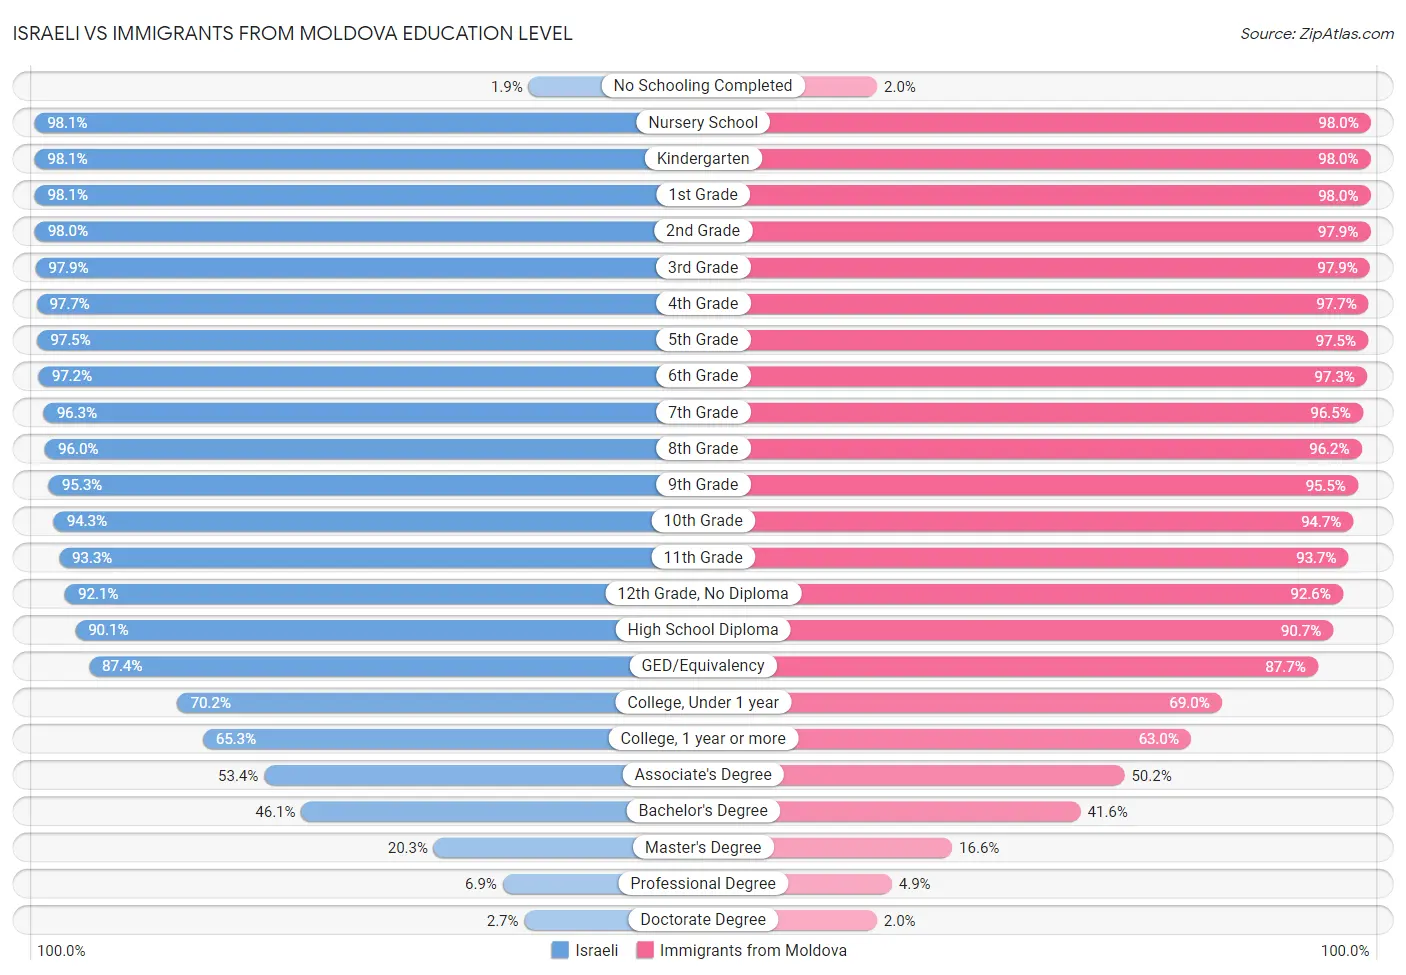 Israeli vs Immigrants from Moldova Education Level